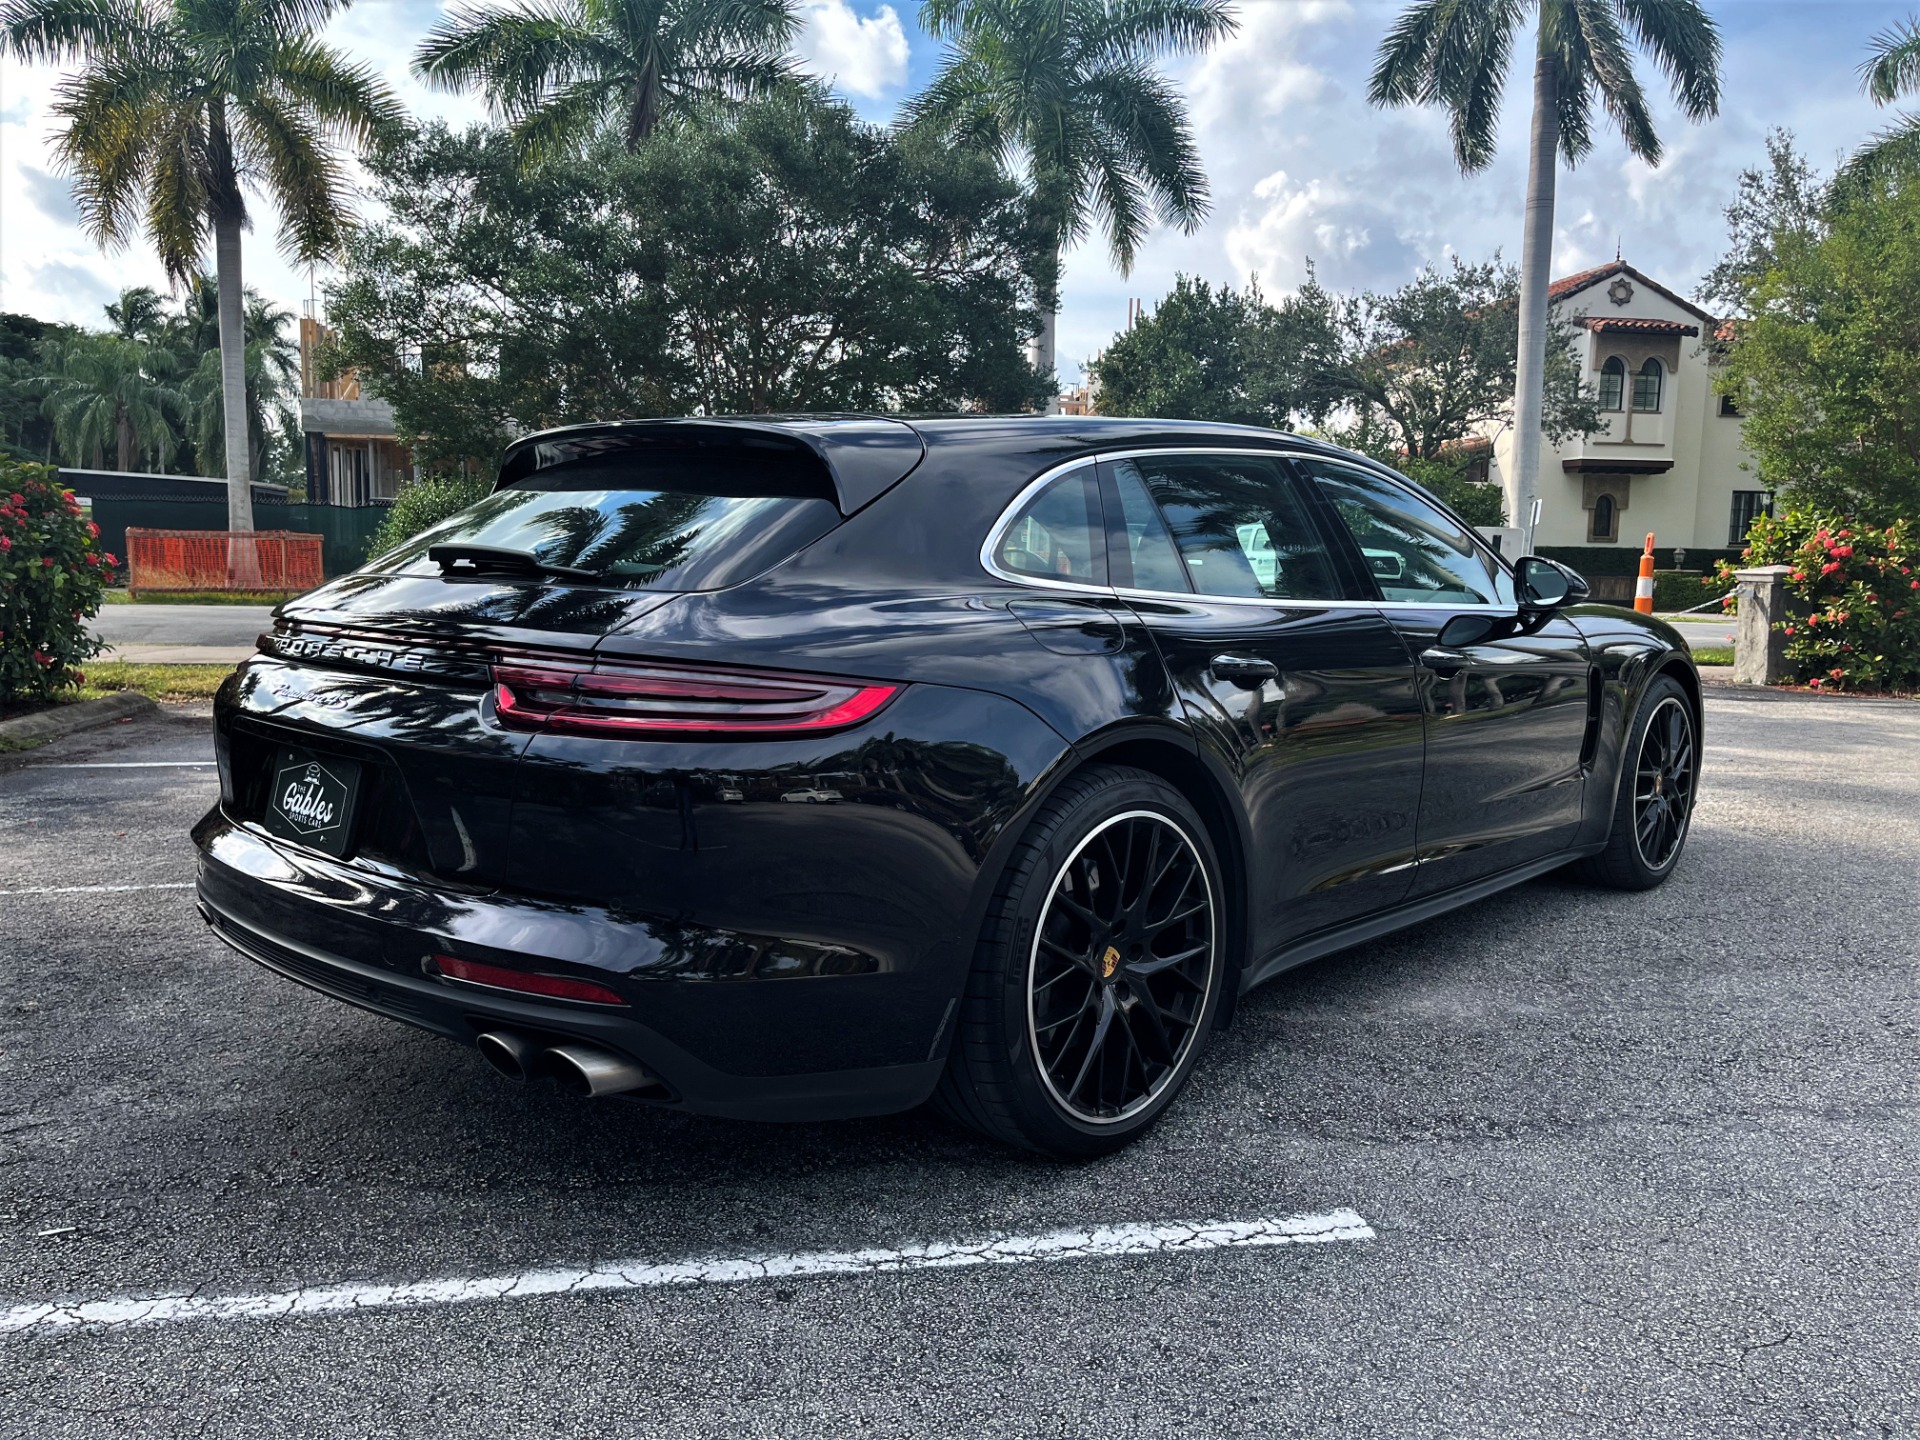 Used 2018 Porsche Panamera 4S Sport Turismo for sale $73,850 at The Gables Sports Cars in Miami FL 33146 2